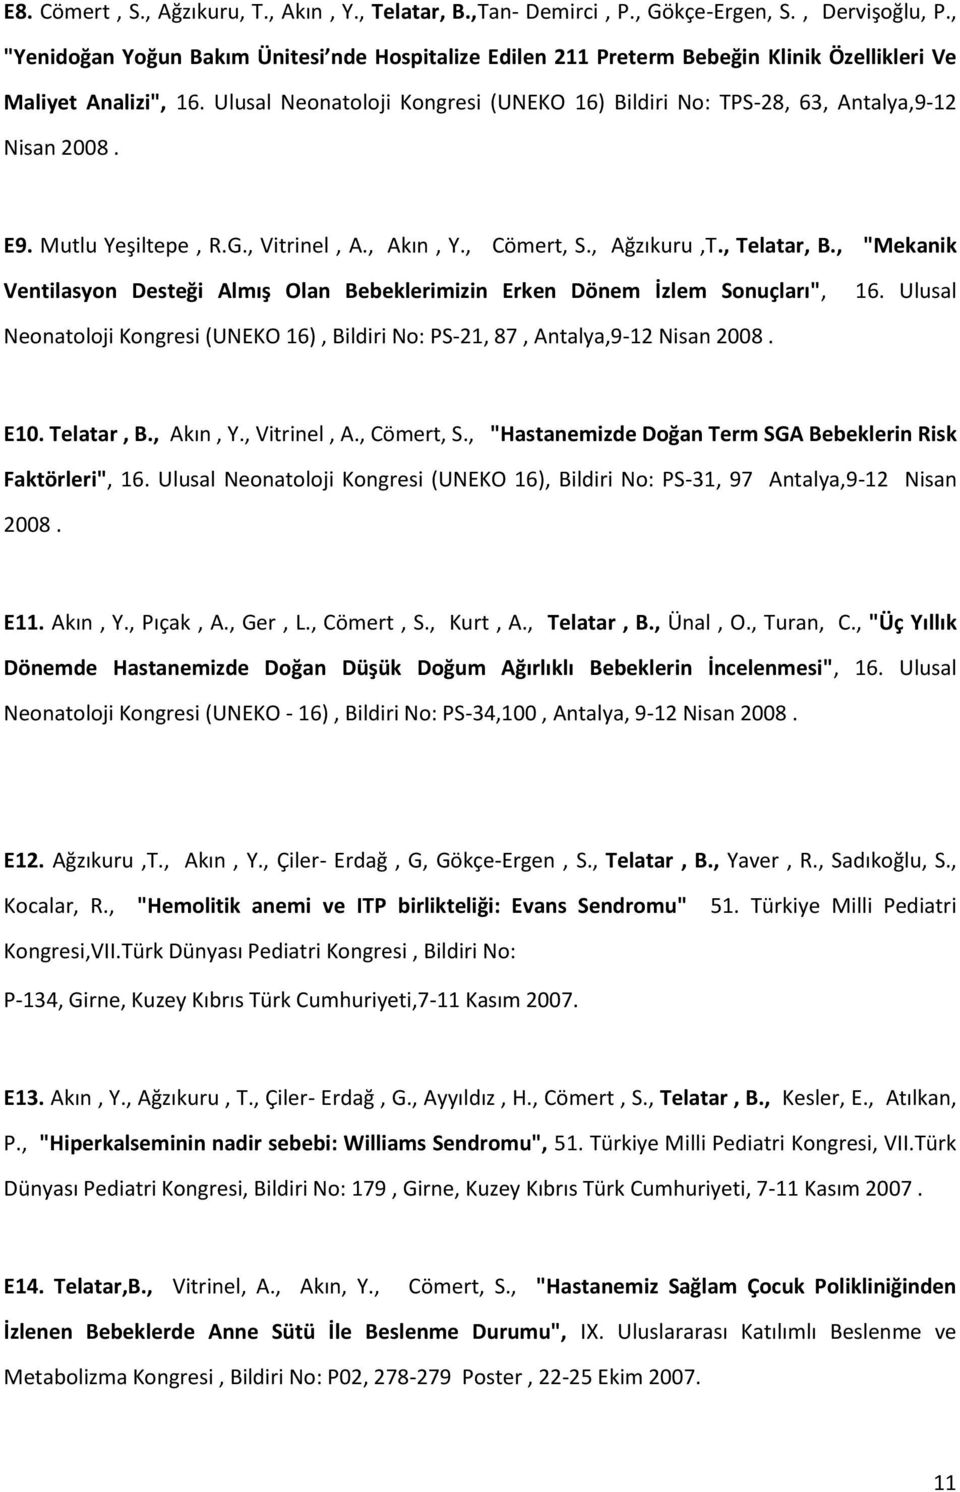 Ulusal Neonatoloji Kongresi (UNEKO 16) Bildiri No: TPS-28, 63, Antalya,9-12 Nisan 2008. E9. Mutlu Yeşiltepe, R.G., Vitrinel, A., Akın, Y., Cömert, S., Ağzıkuru,T., Telatar, B.